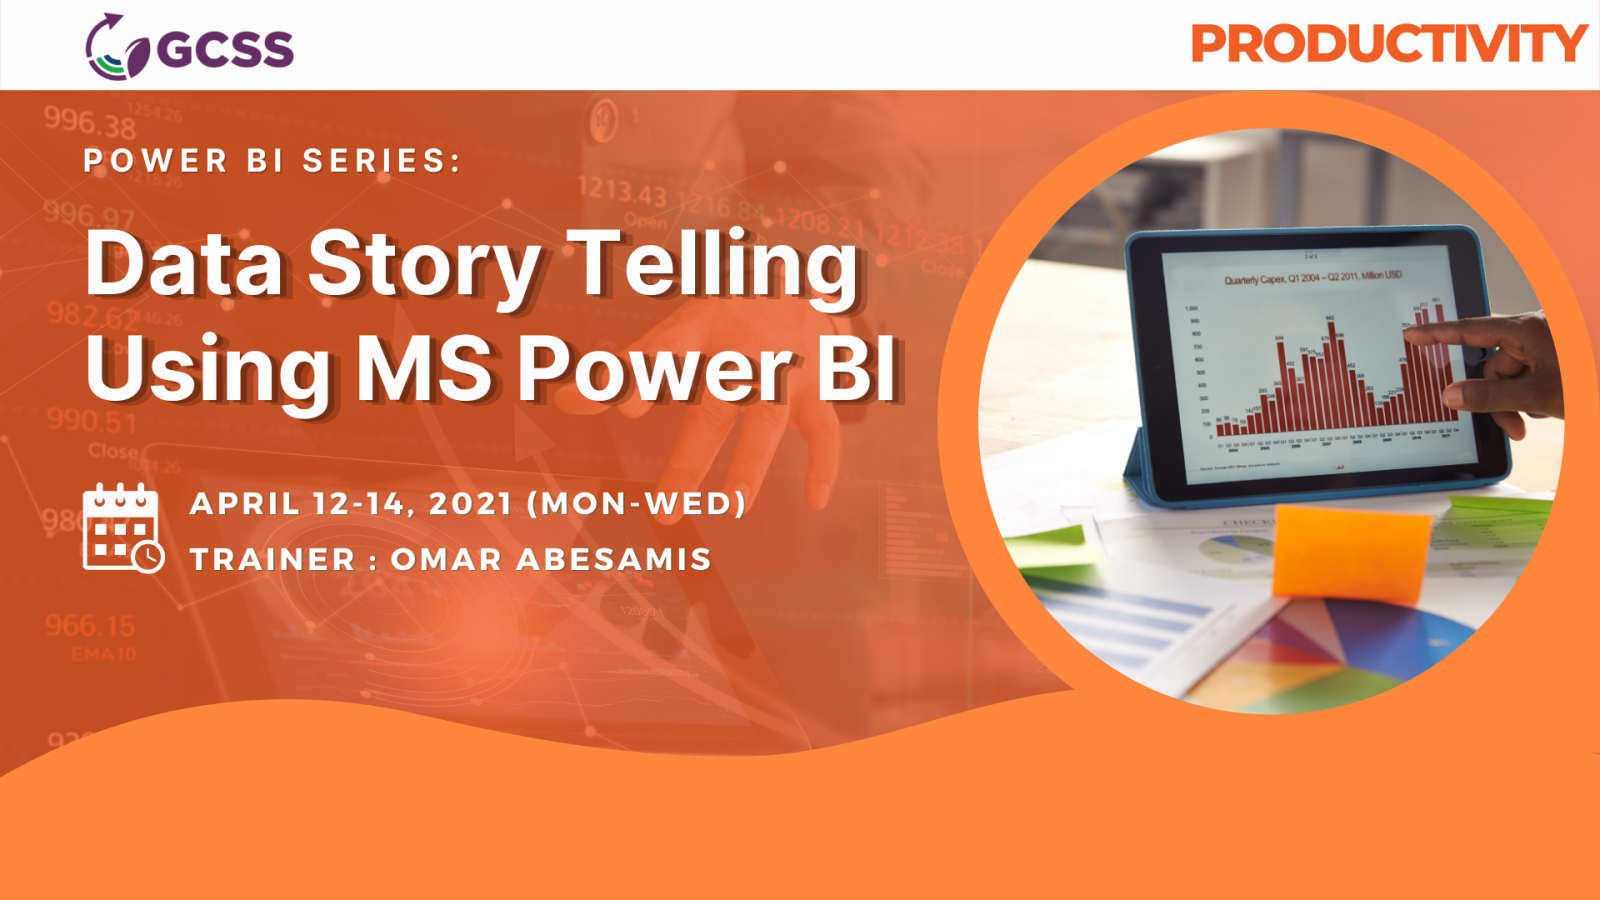 Data Story Telling Using MS Power BI, Manila, National Capital Region, Philippines